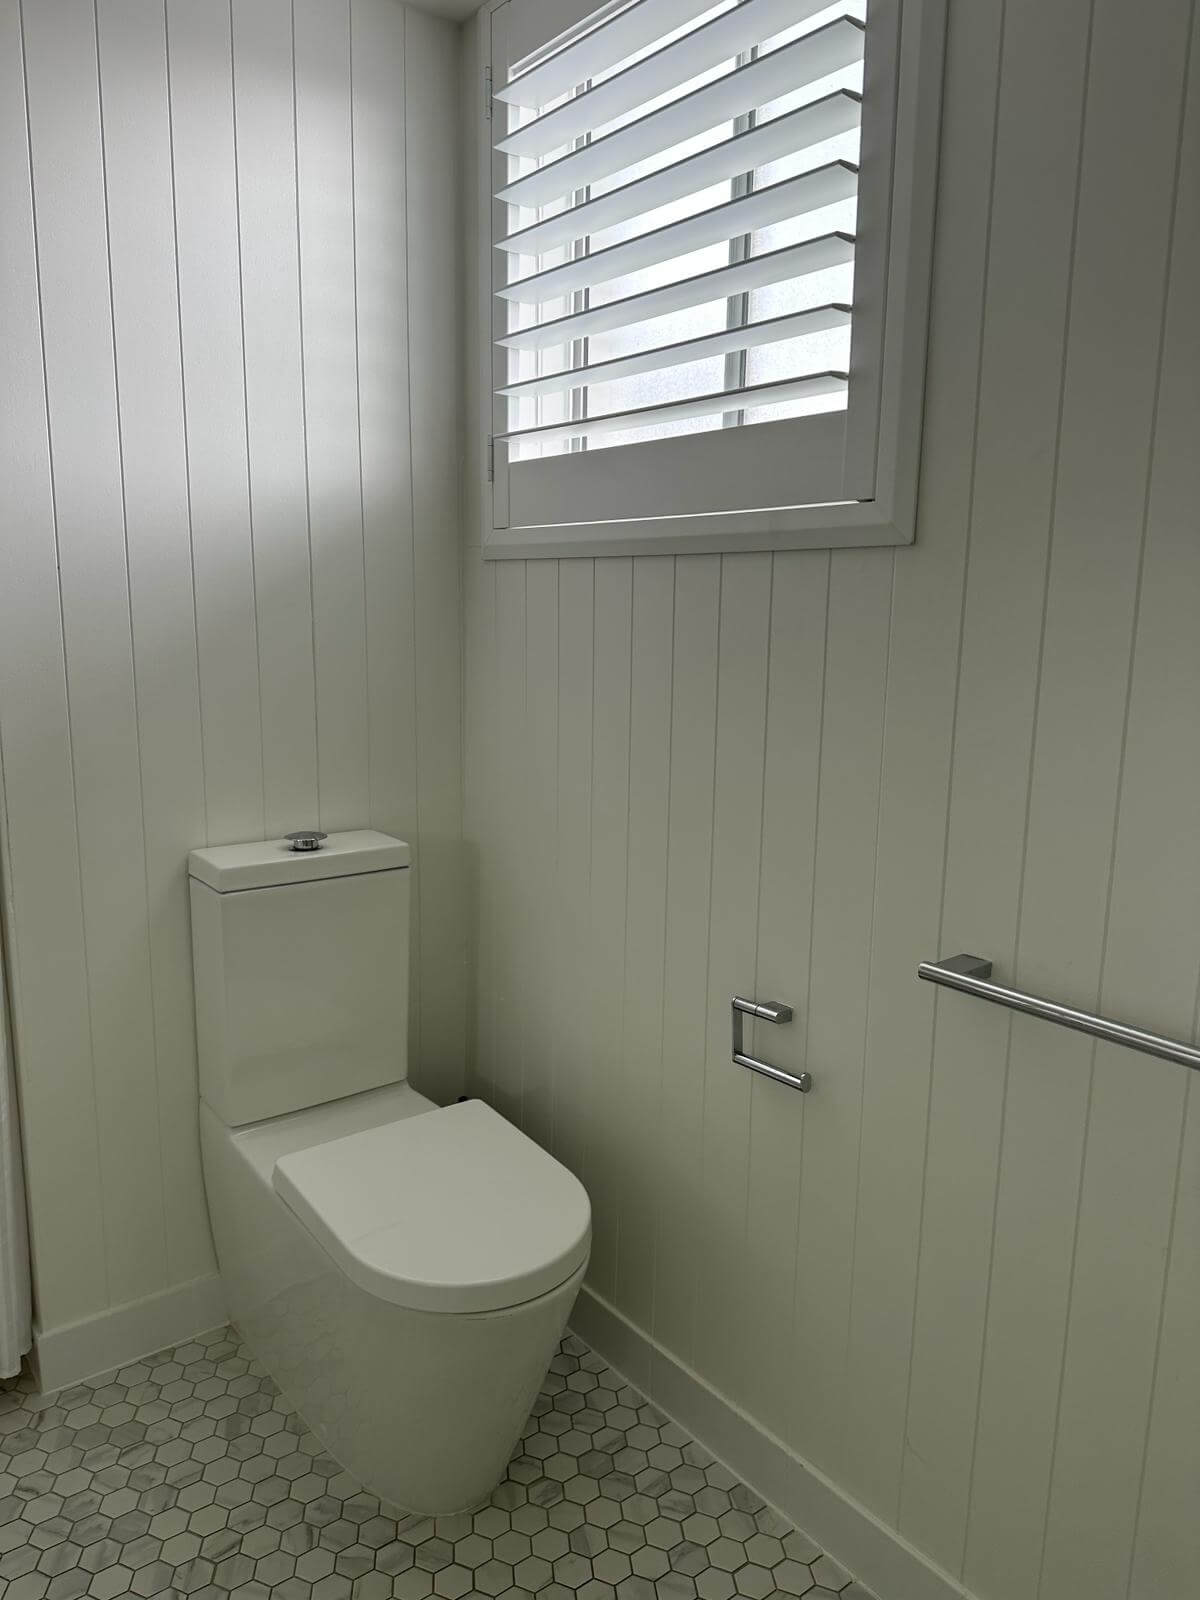 disabled toilet renovations sydney